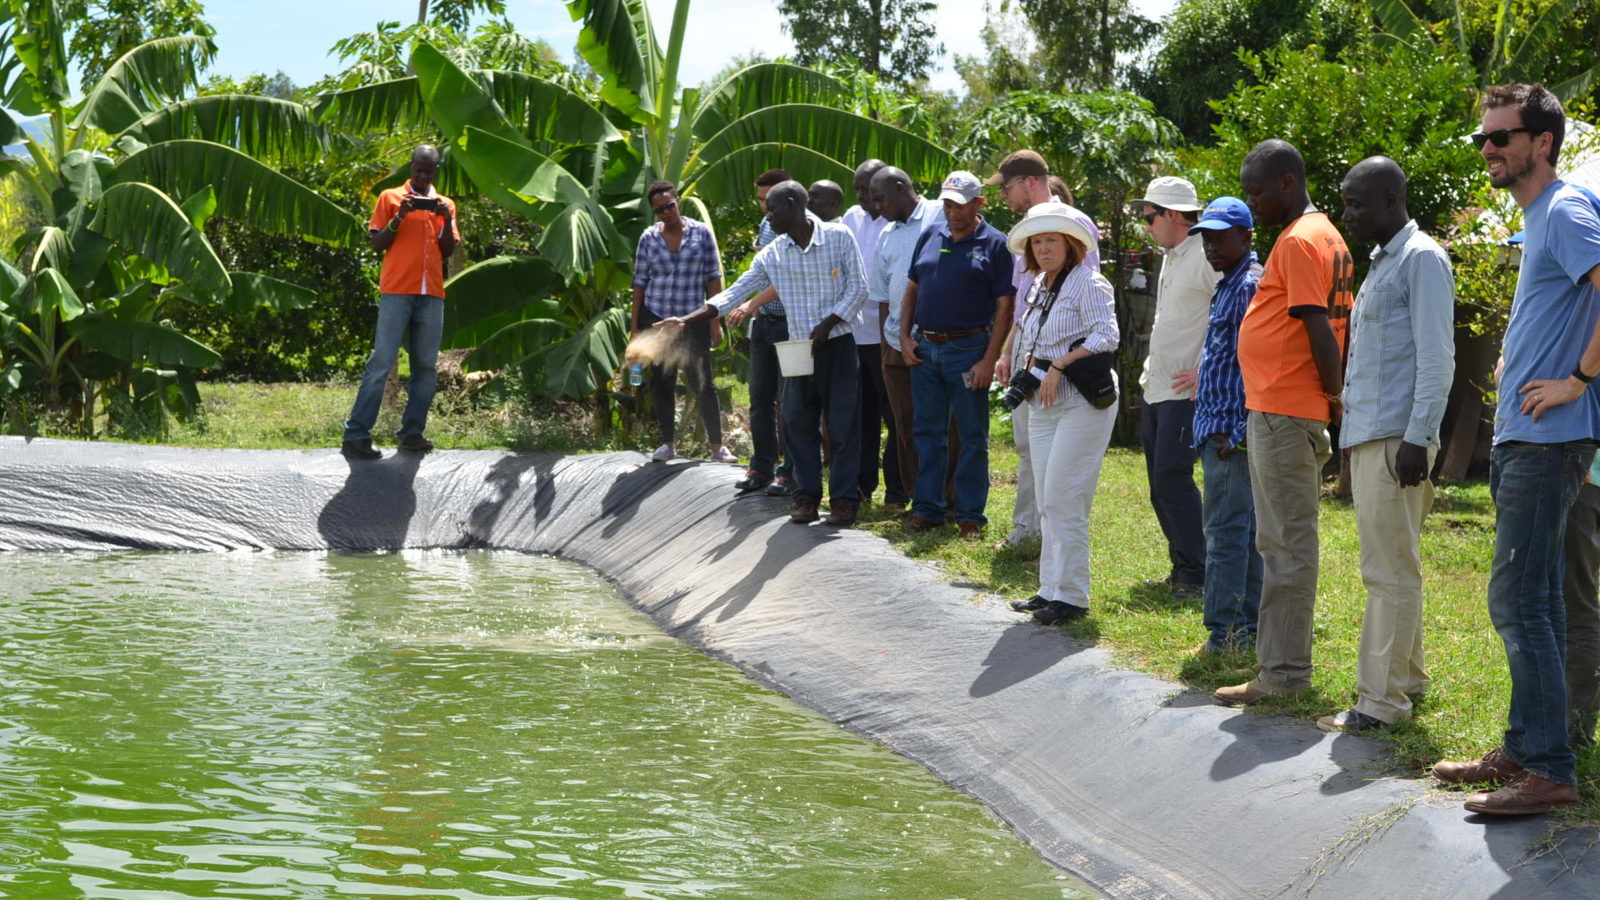 Lead farmer, Joshua Okundi shows the group his tilapia fish ponds - solar pump training